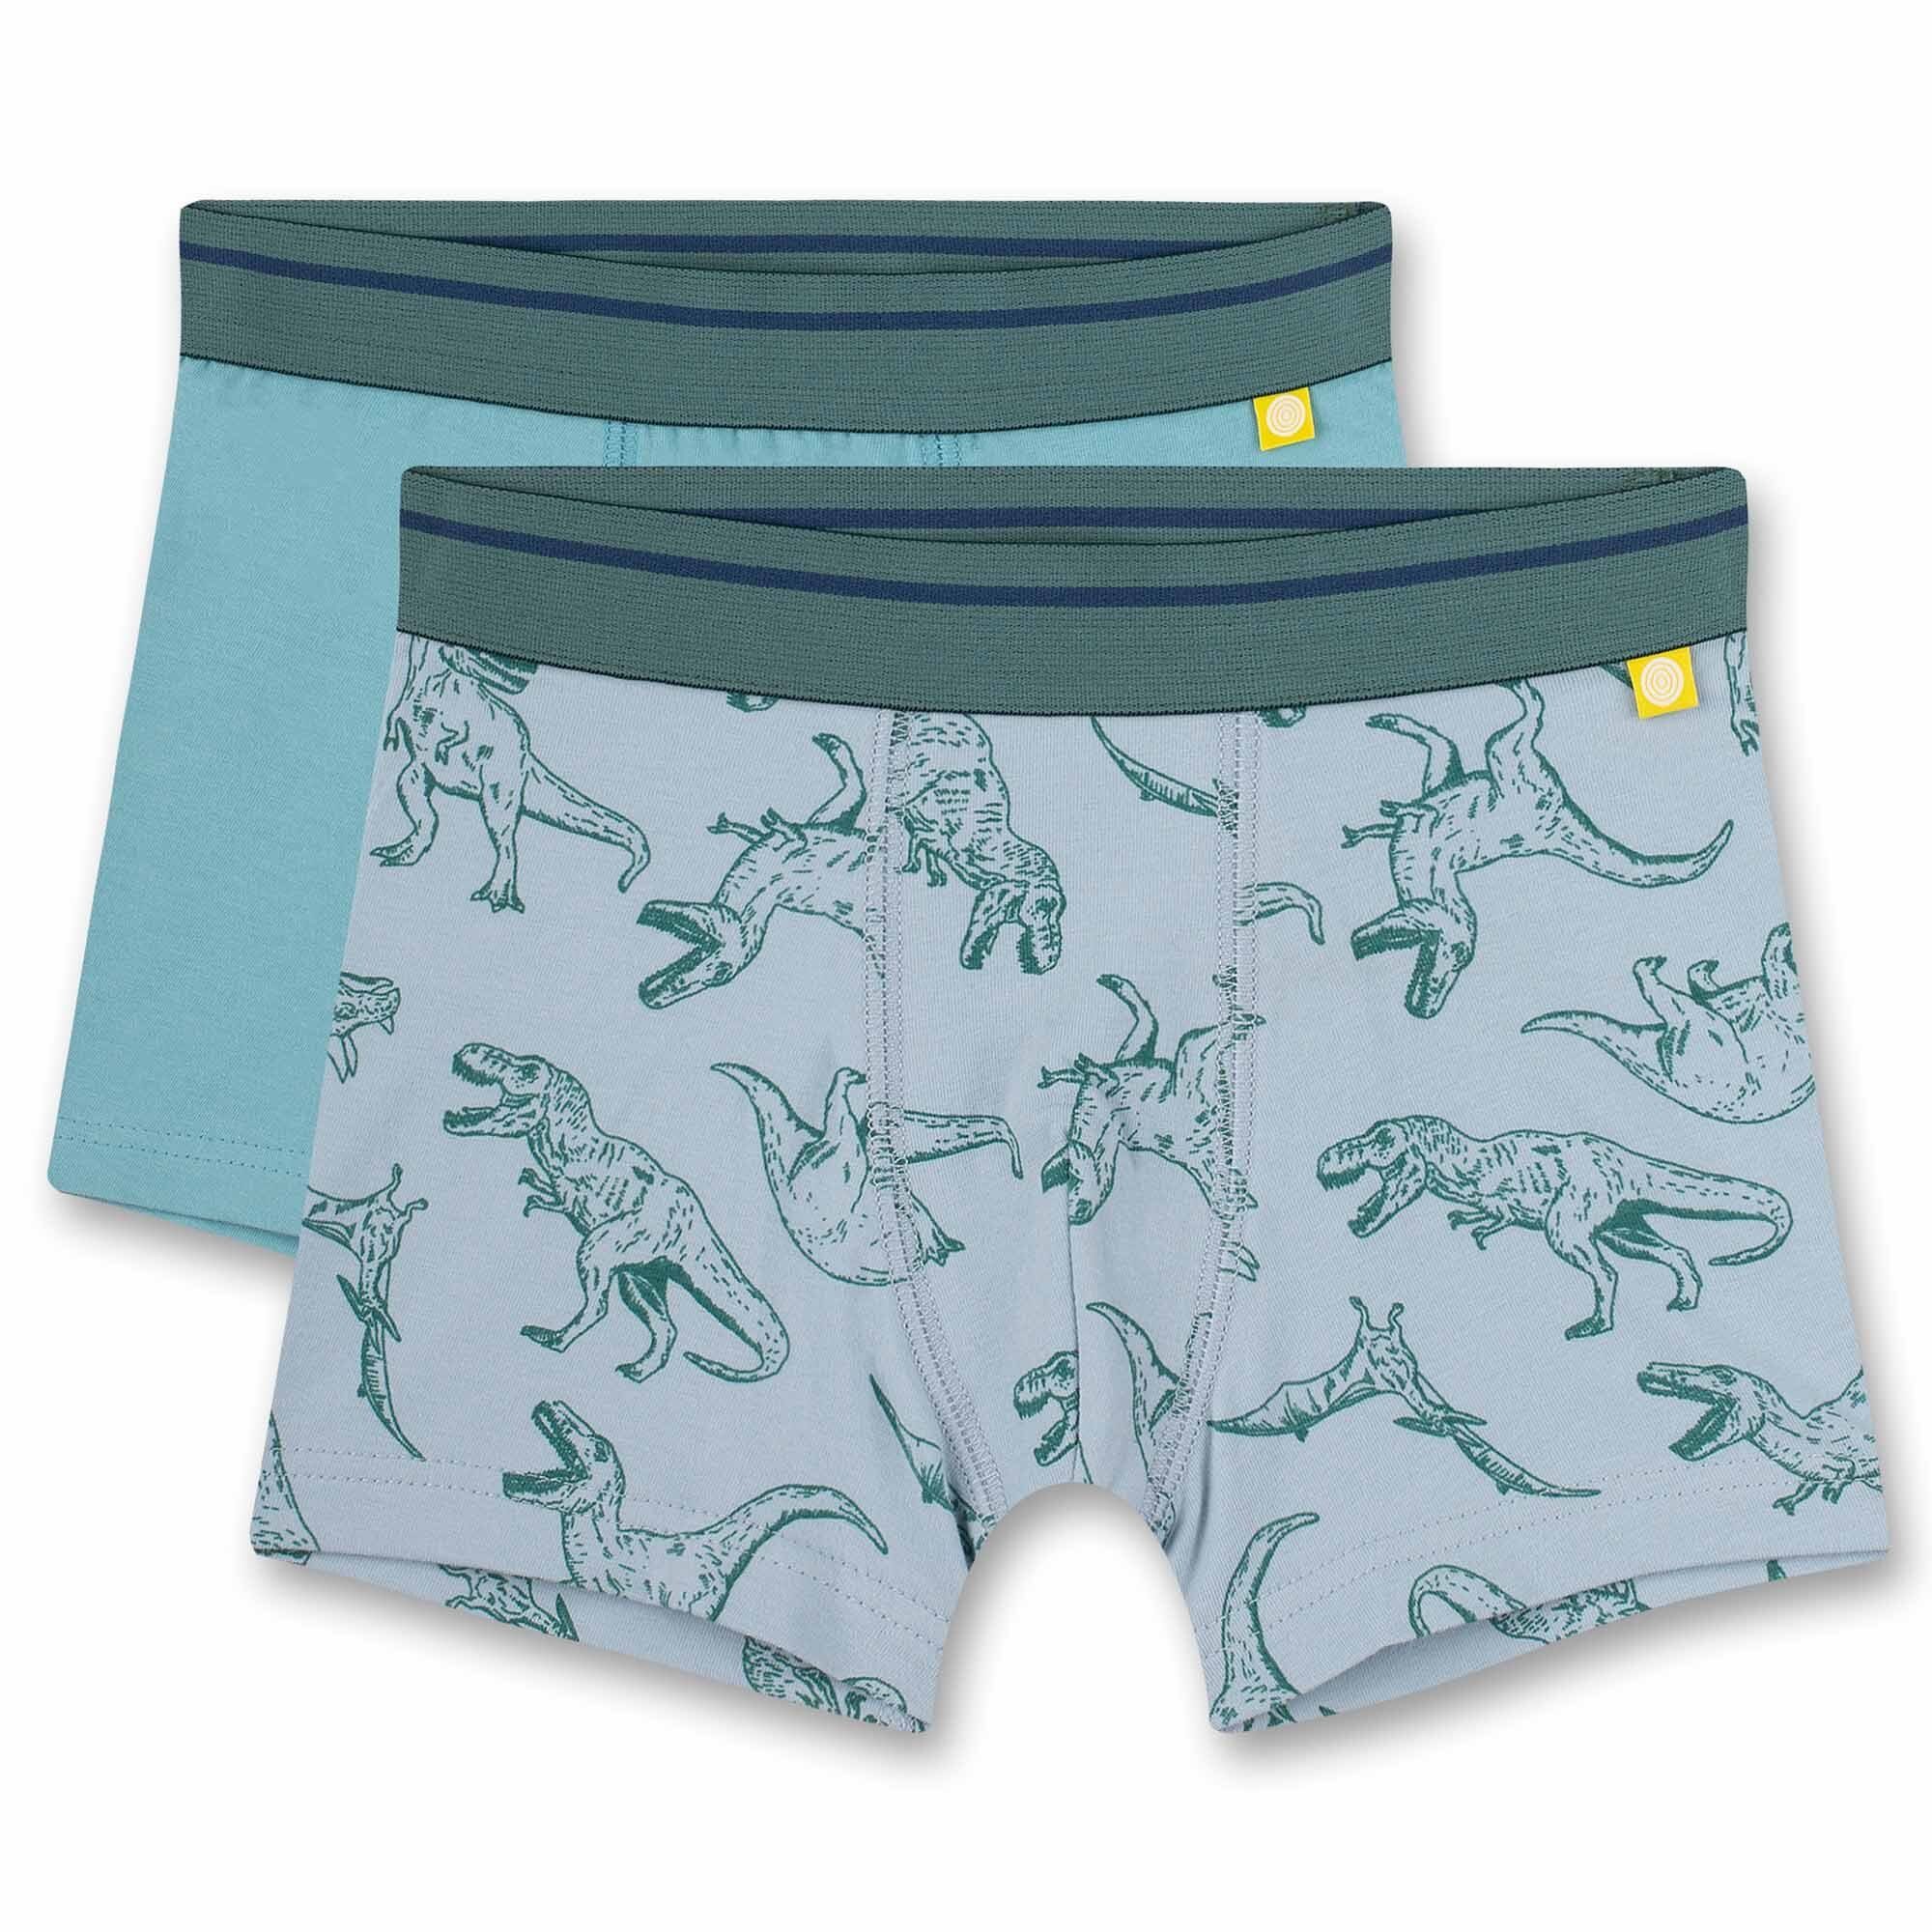 Sanetta Boxer Jungen Shorts 2er Pack - Pants, Unterhose, Single